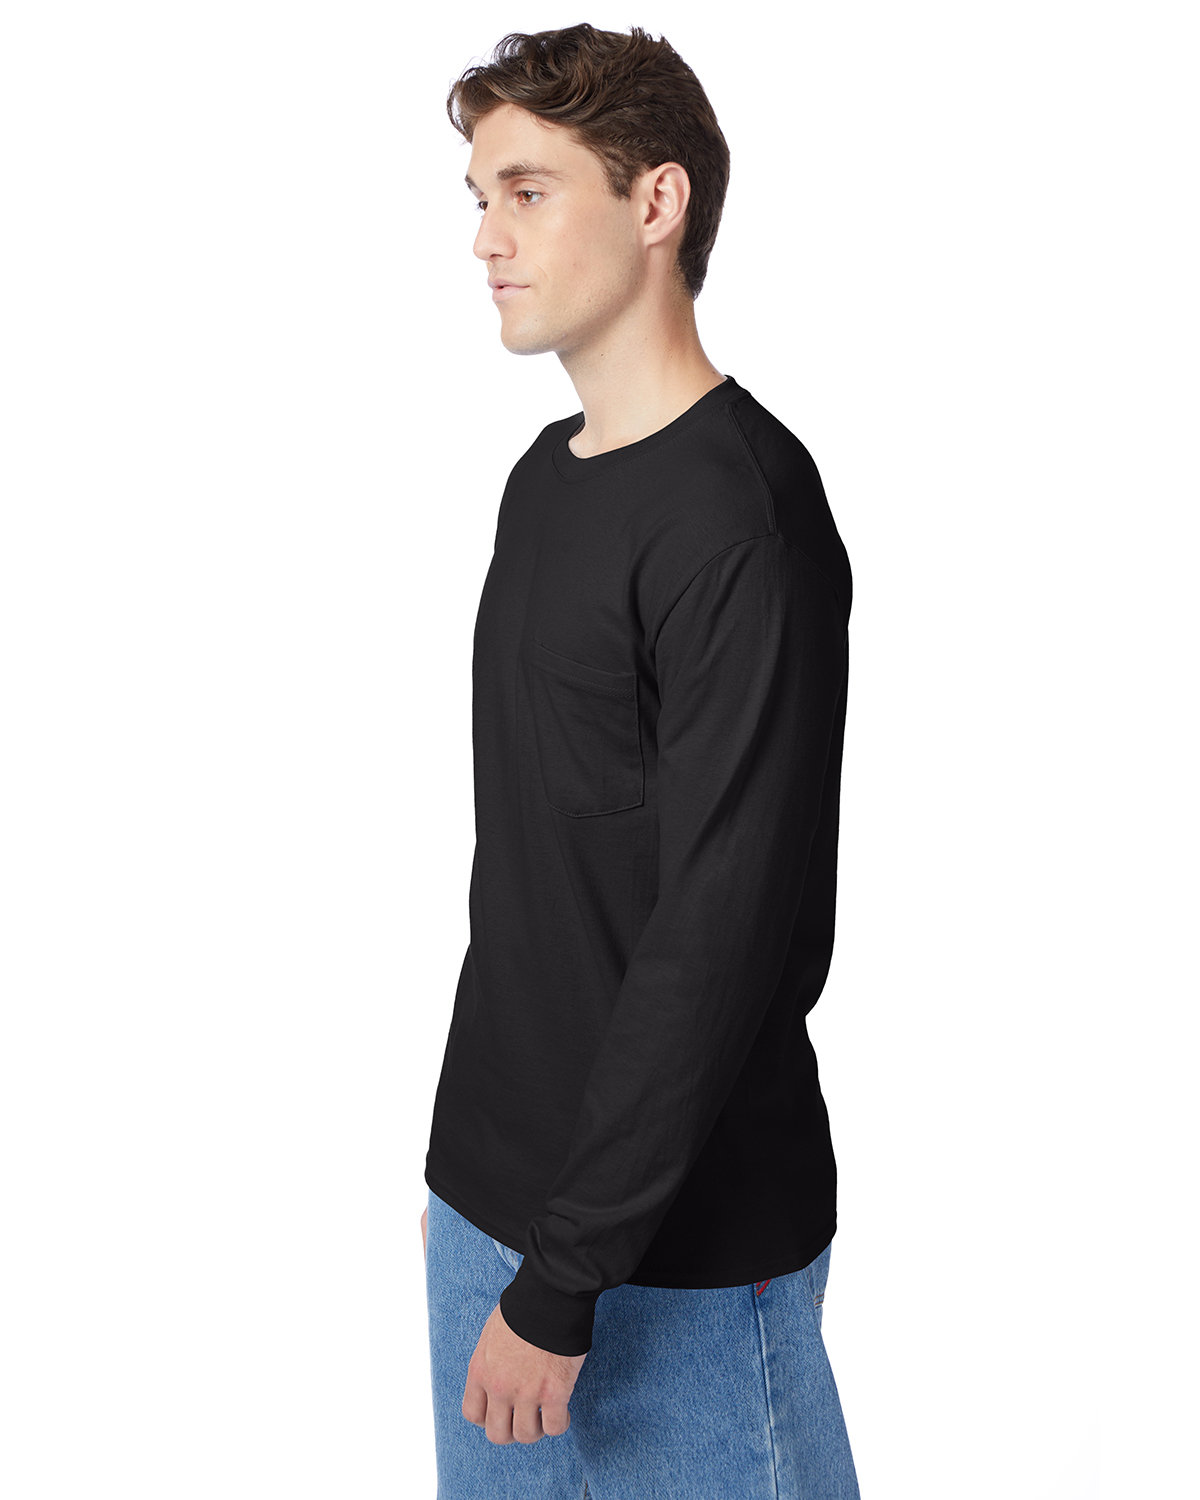 Hanes Men's Authentic-T Long-Sleeve Pocket T-Shirt BLACK 